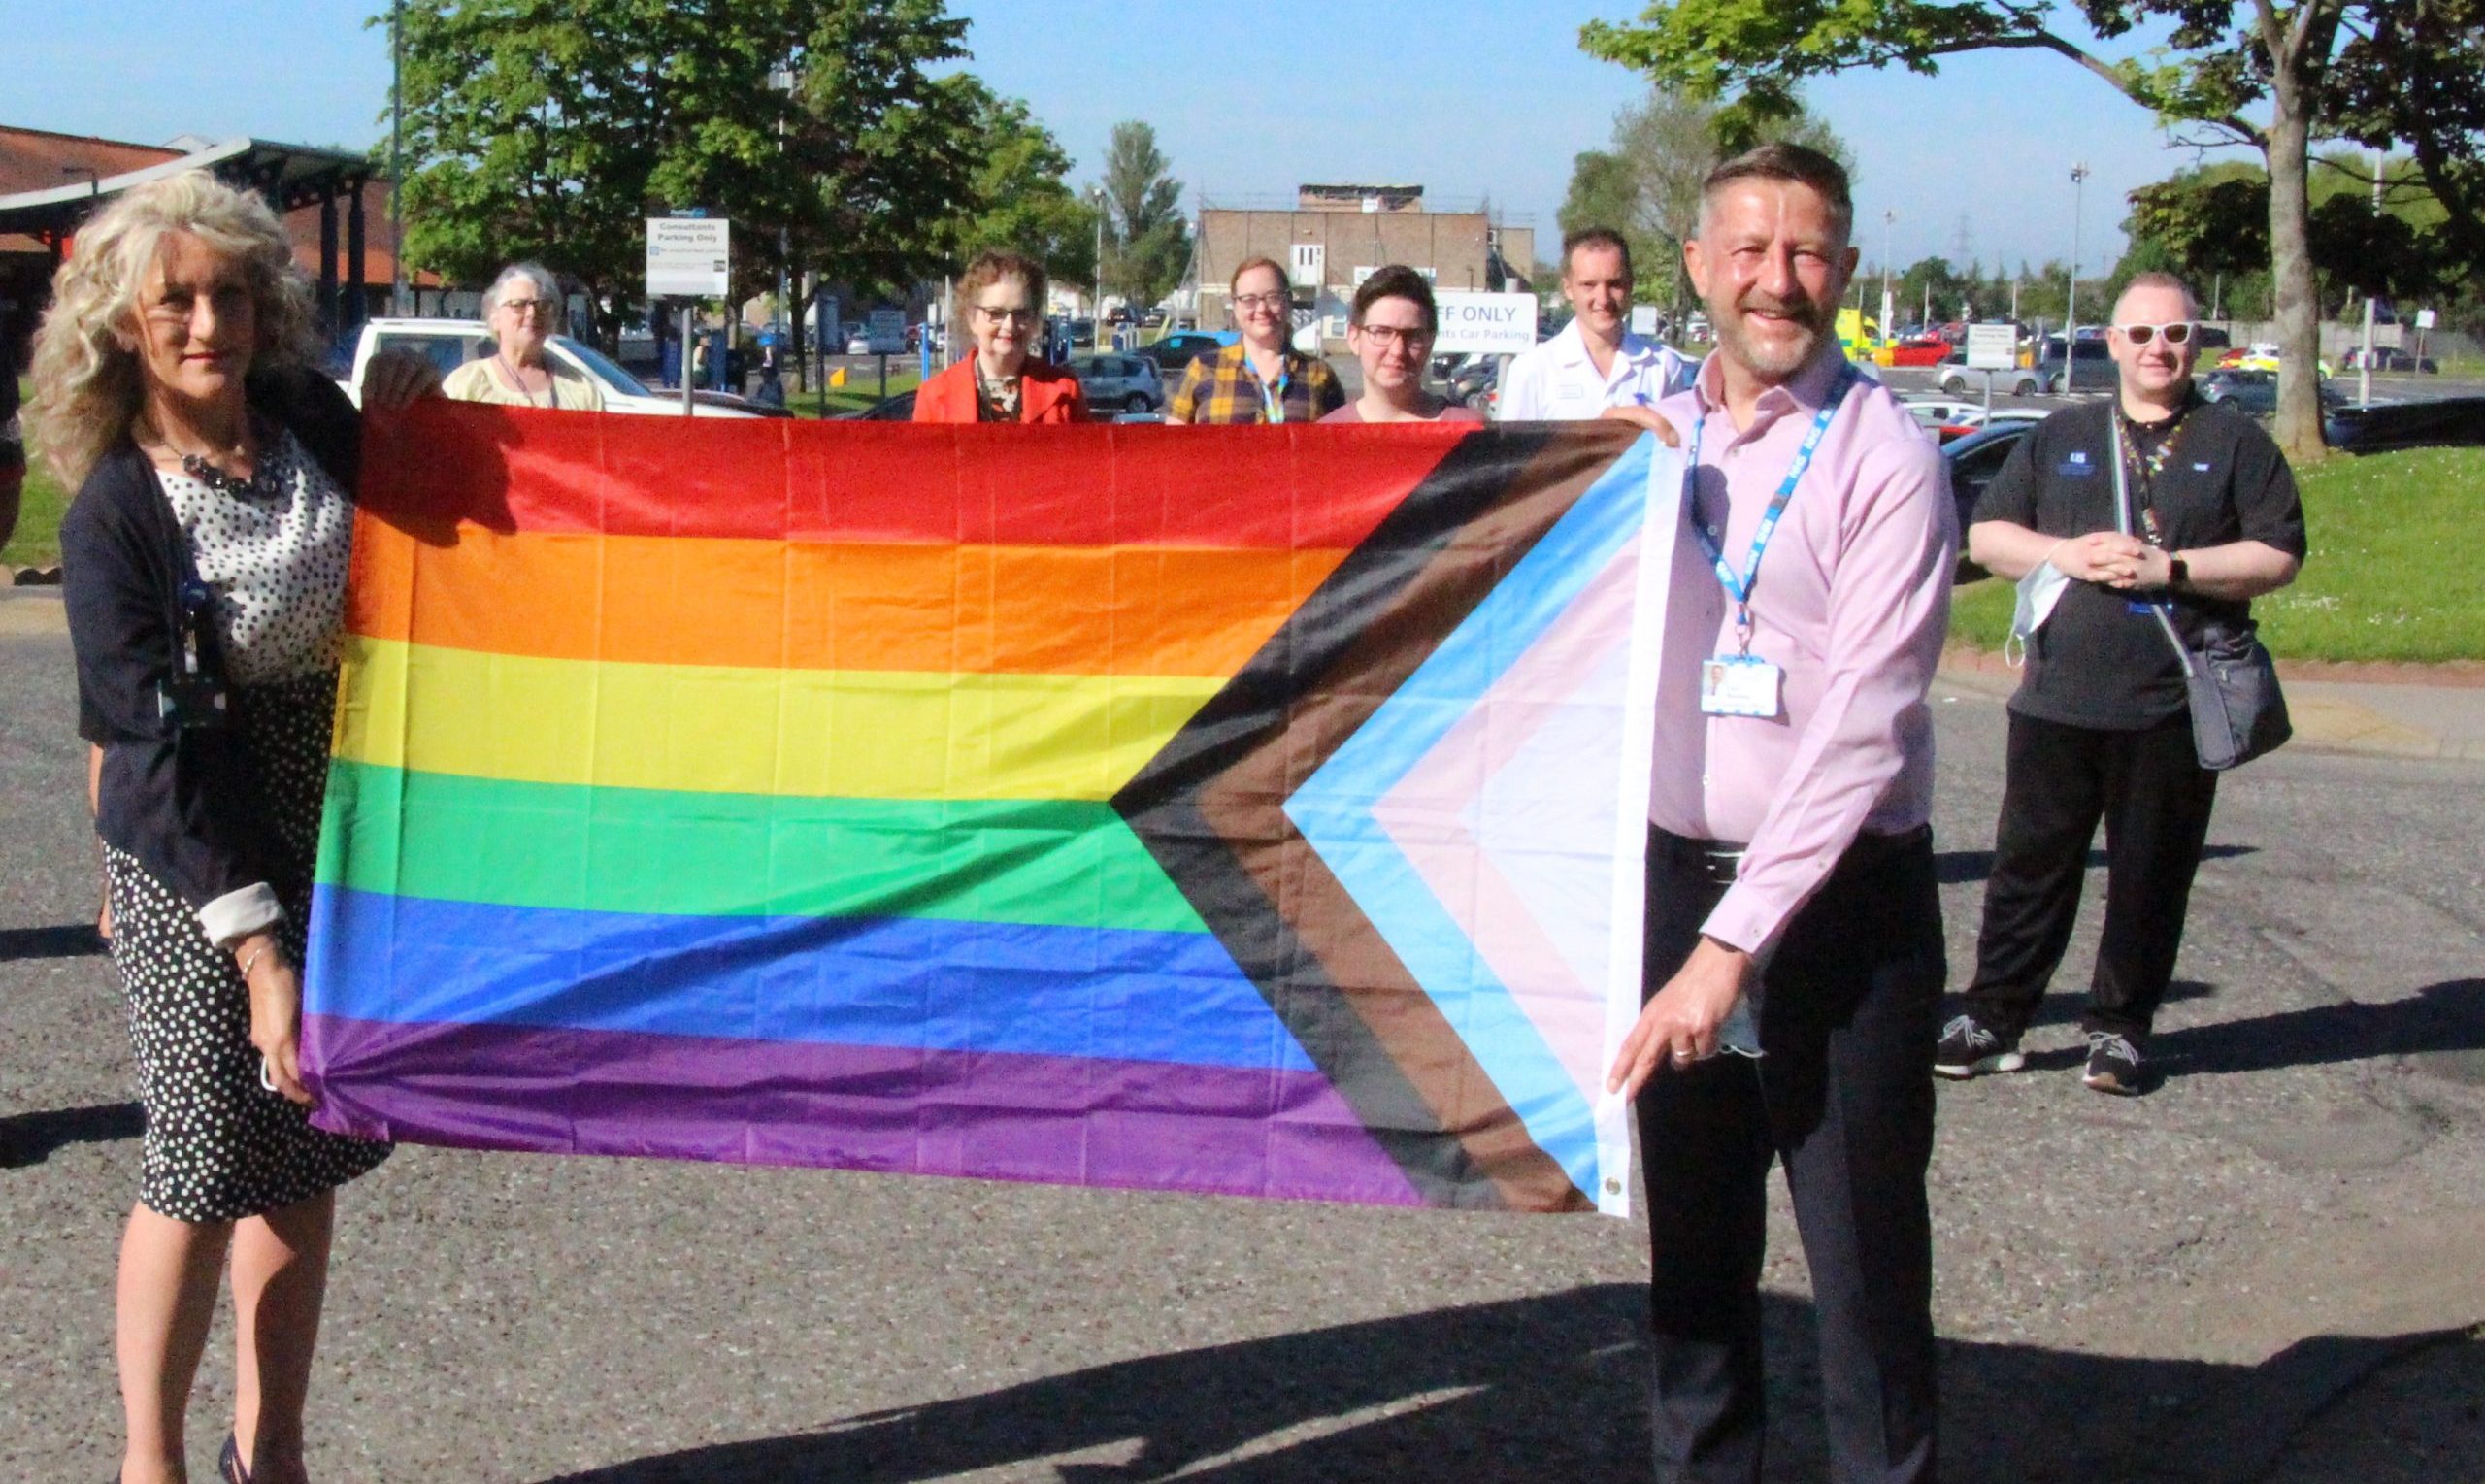 Staff raise the LGBTQ+ flag during Pride.